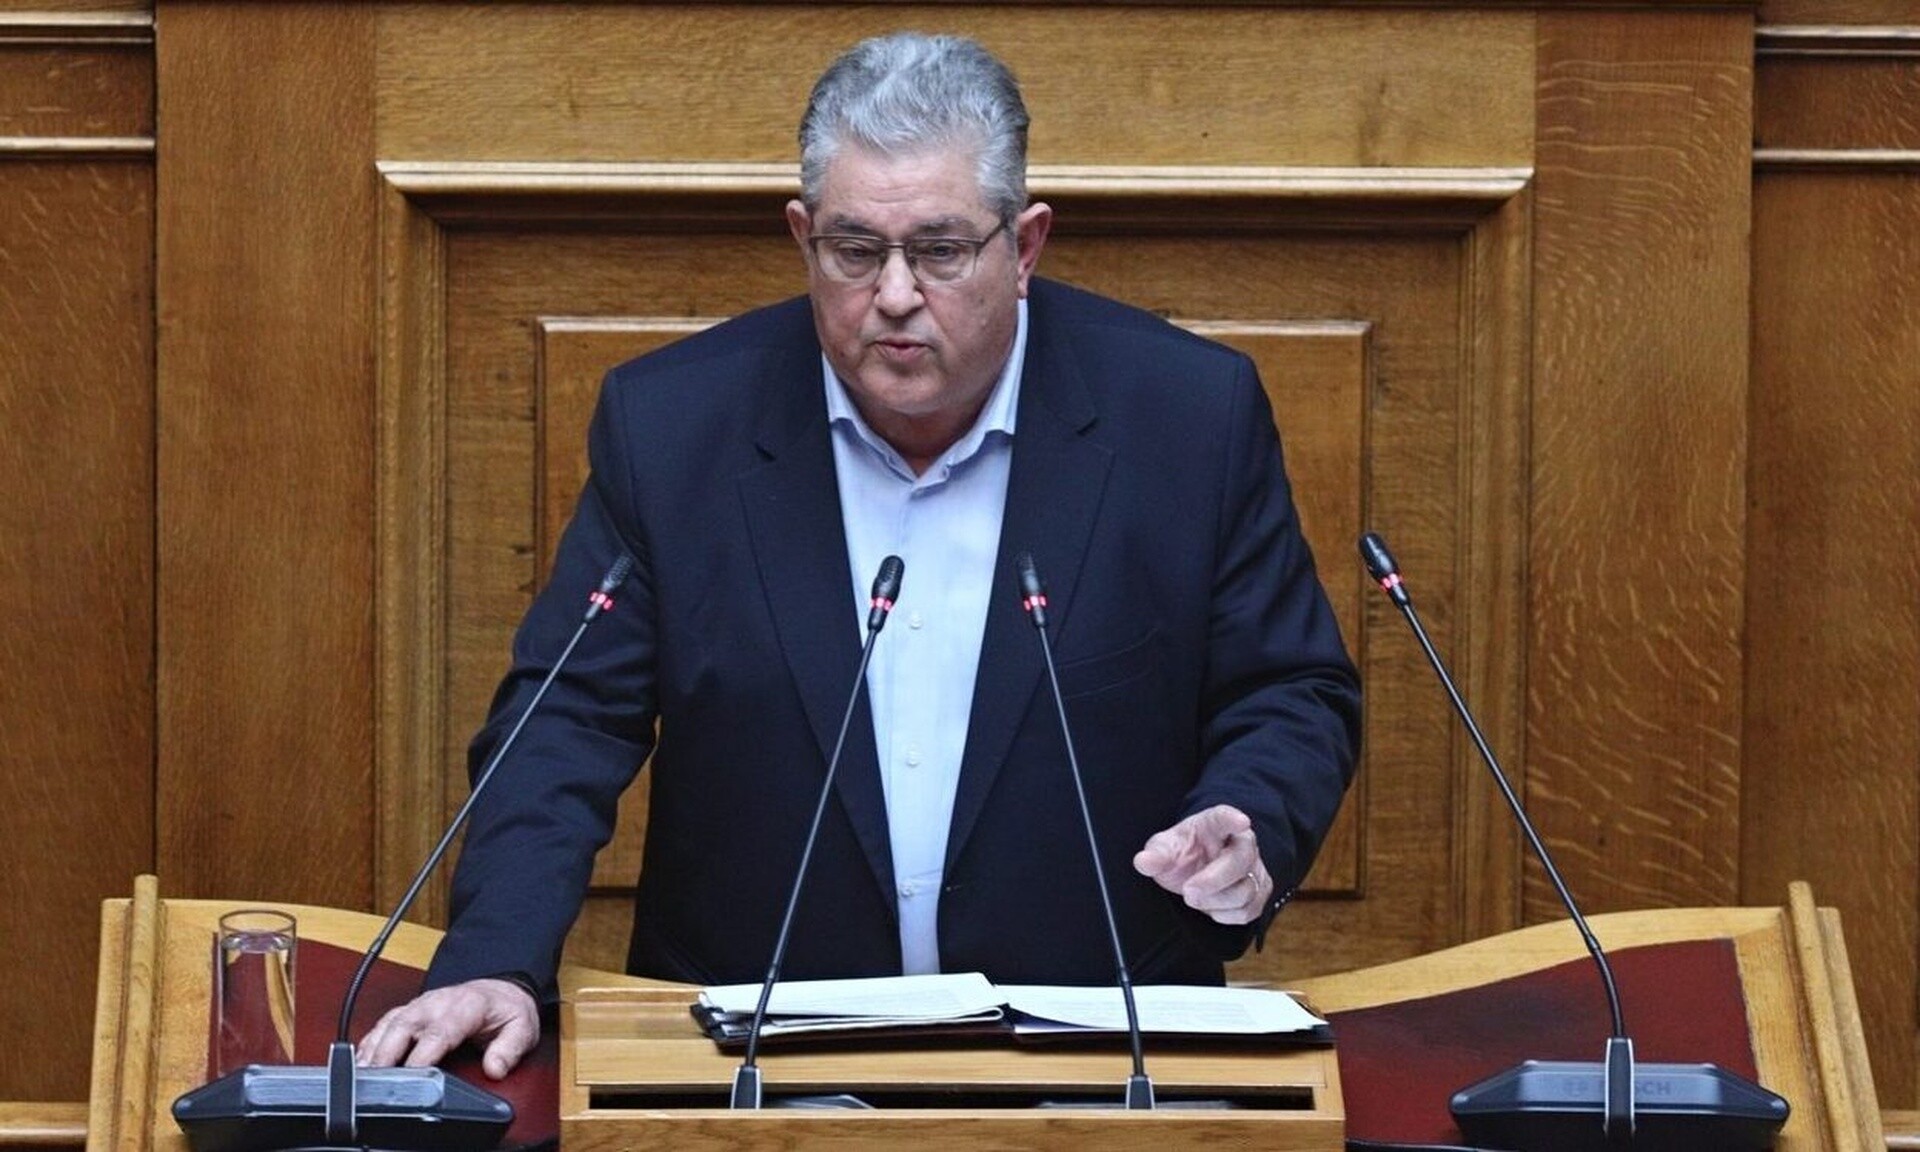 KKE leader Koutsoumbas will not participate in Delphi Economic Forum